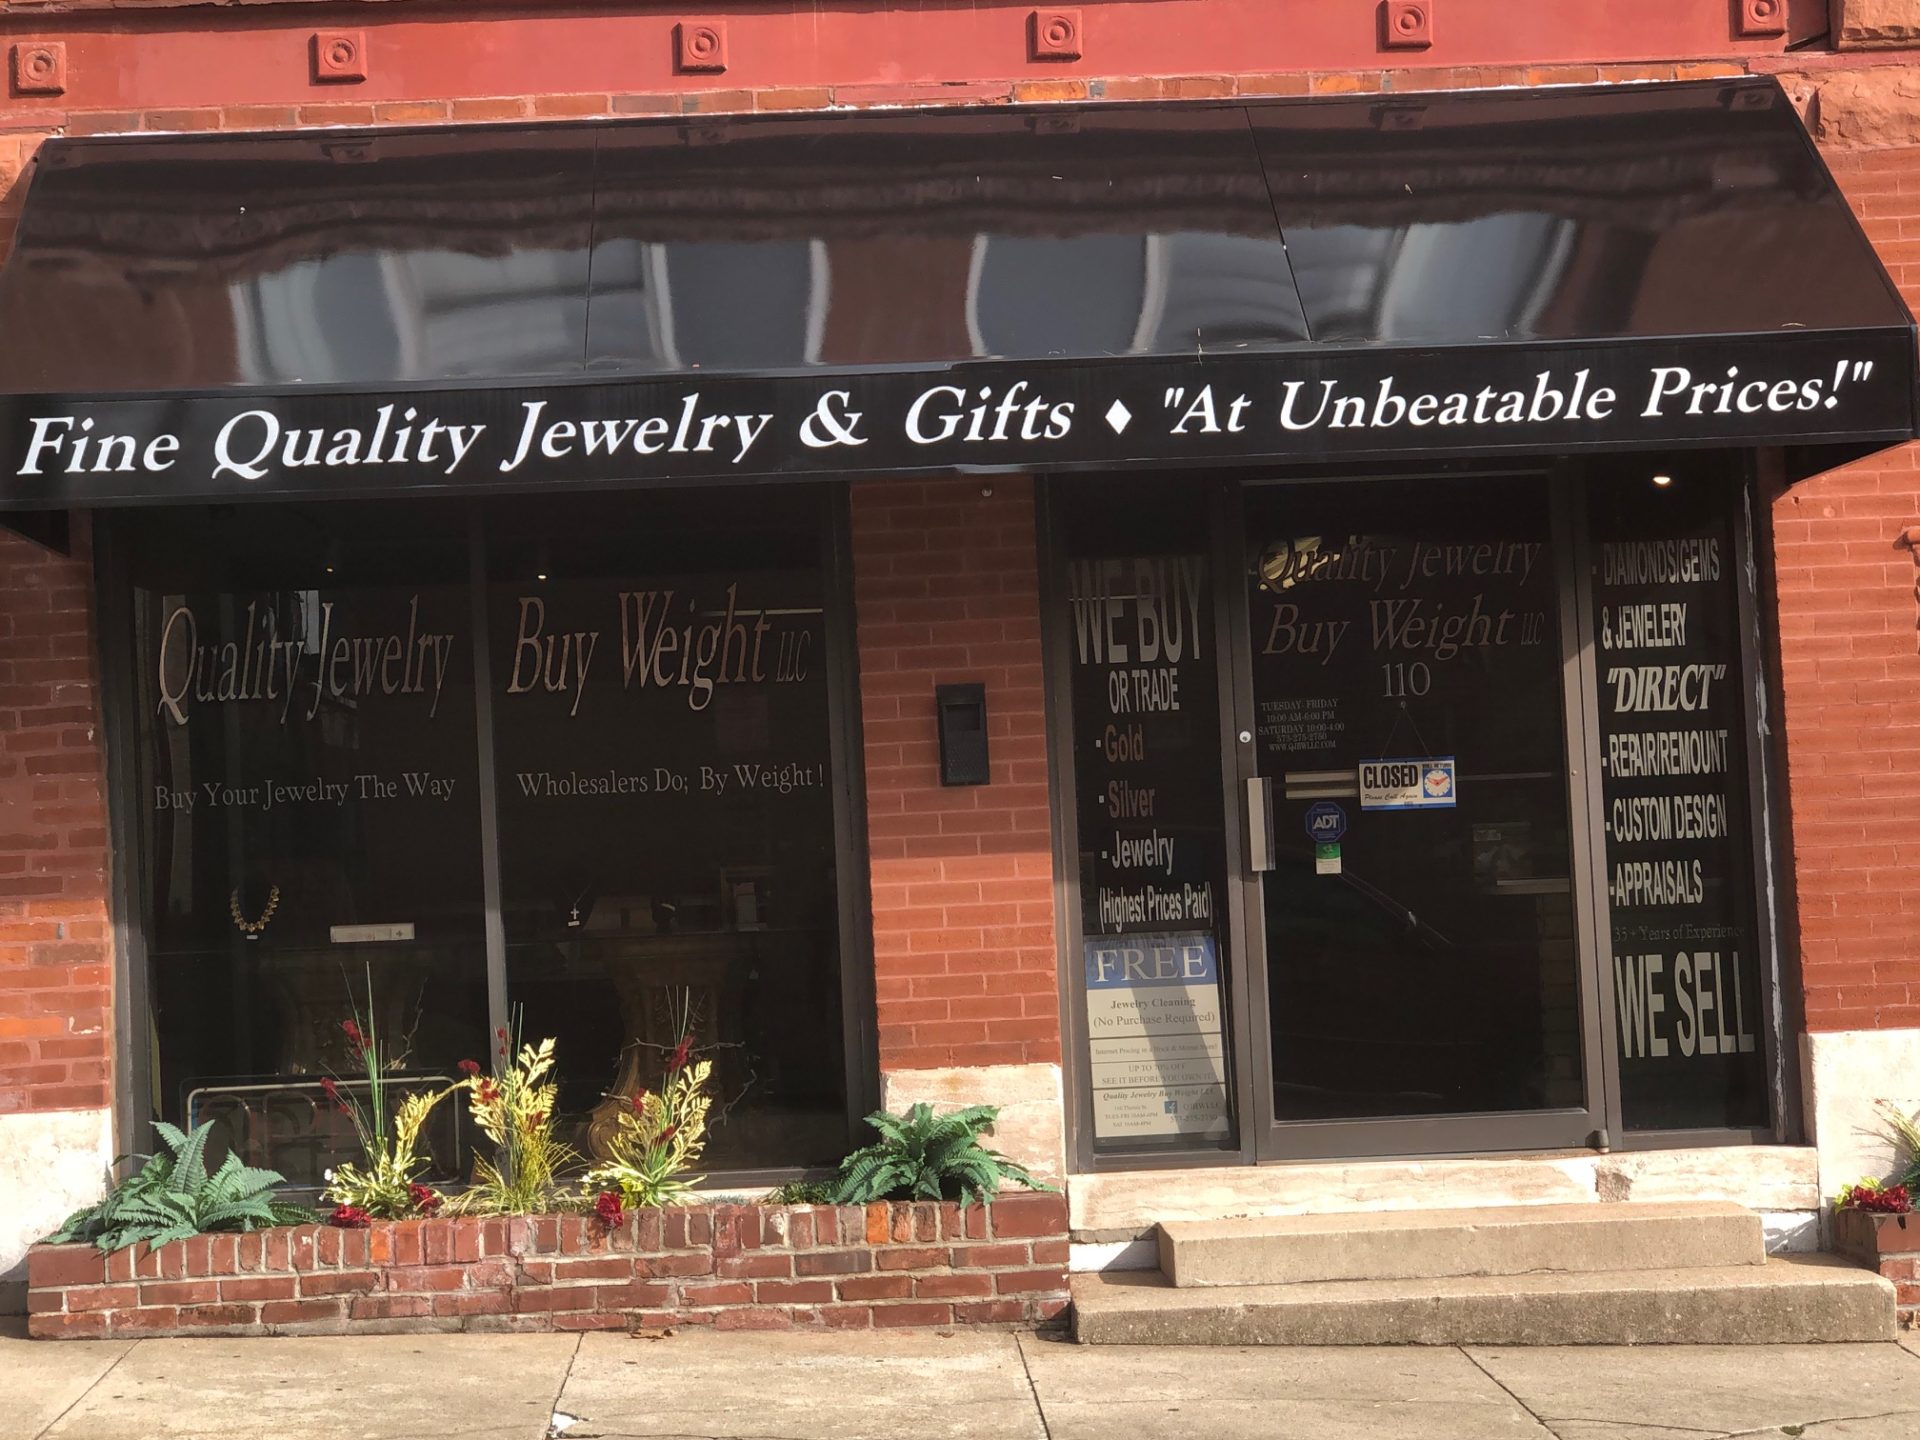 Quality Jewelry Buy Weight